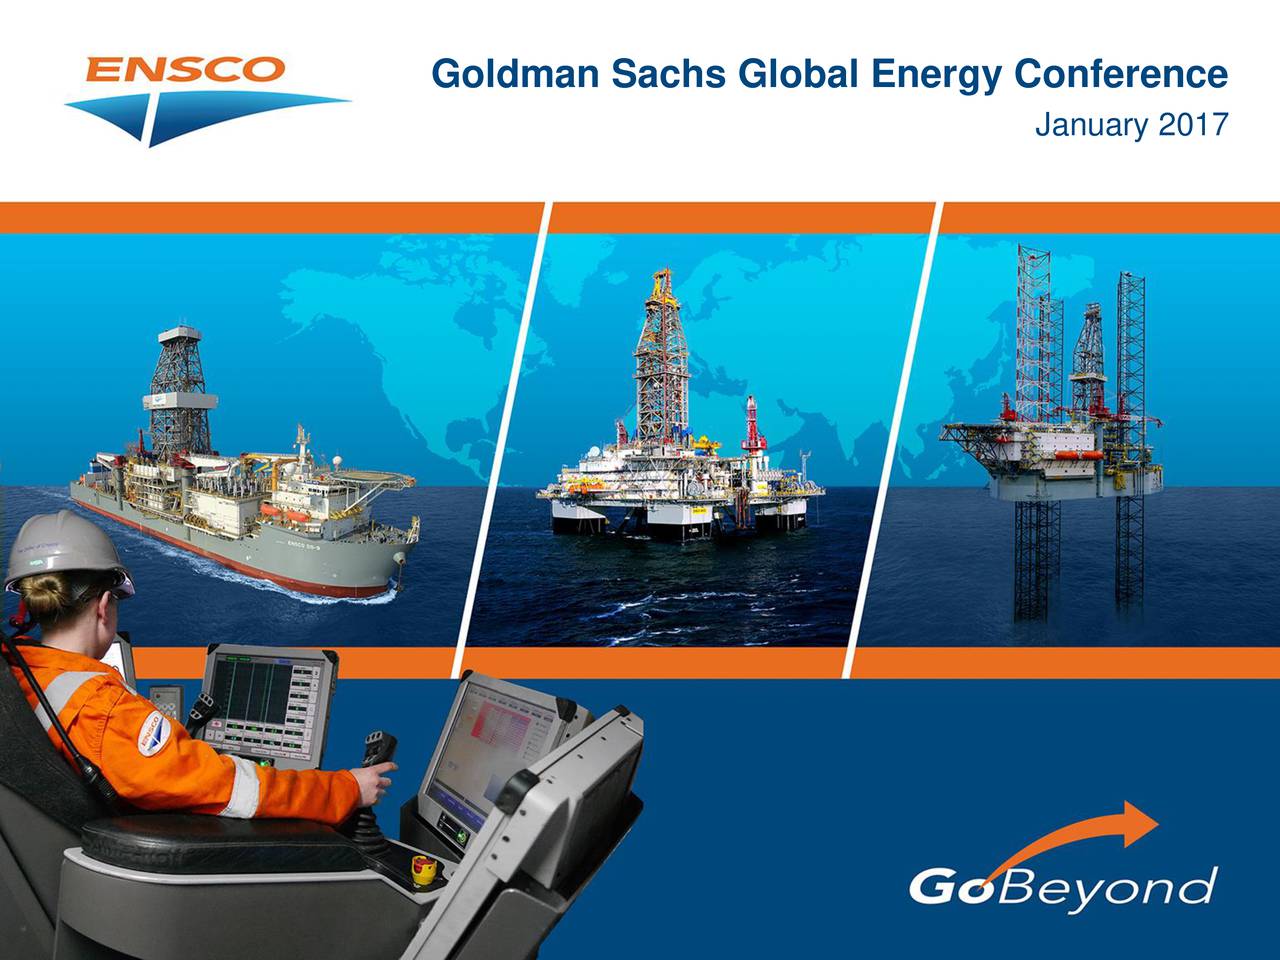 Ensco (ESV) presents at Goldman Sachs Global Energy Conference (NYSE